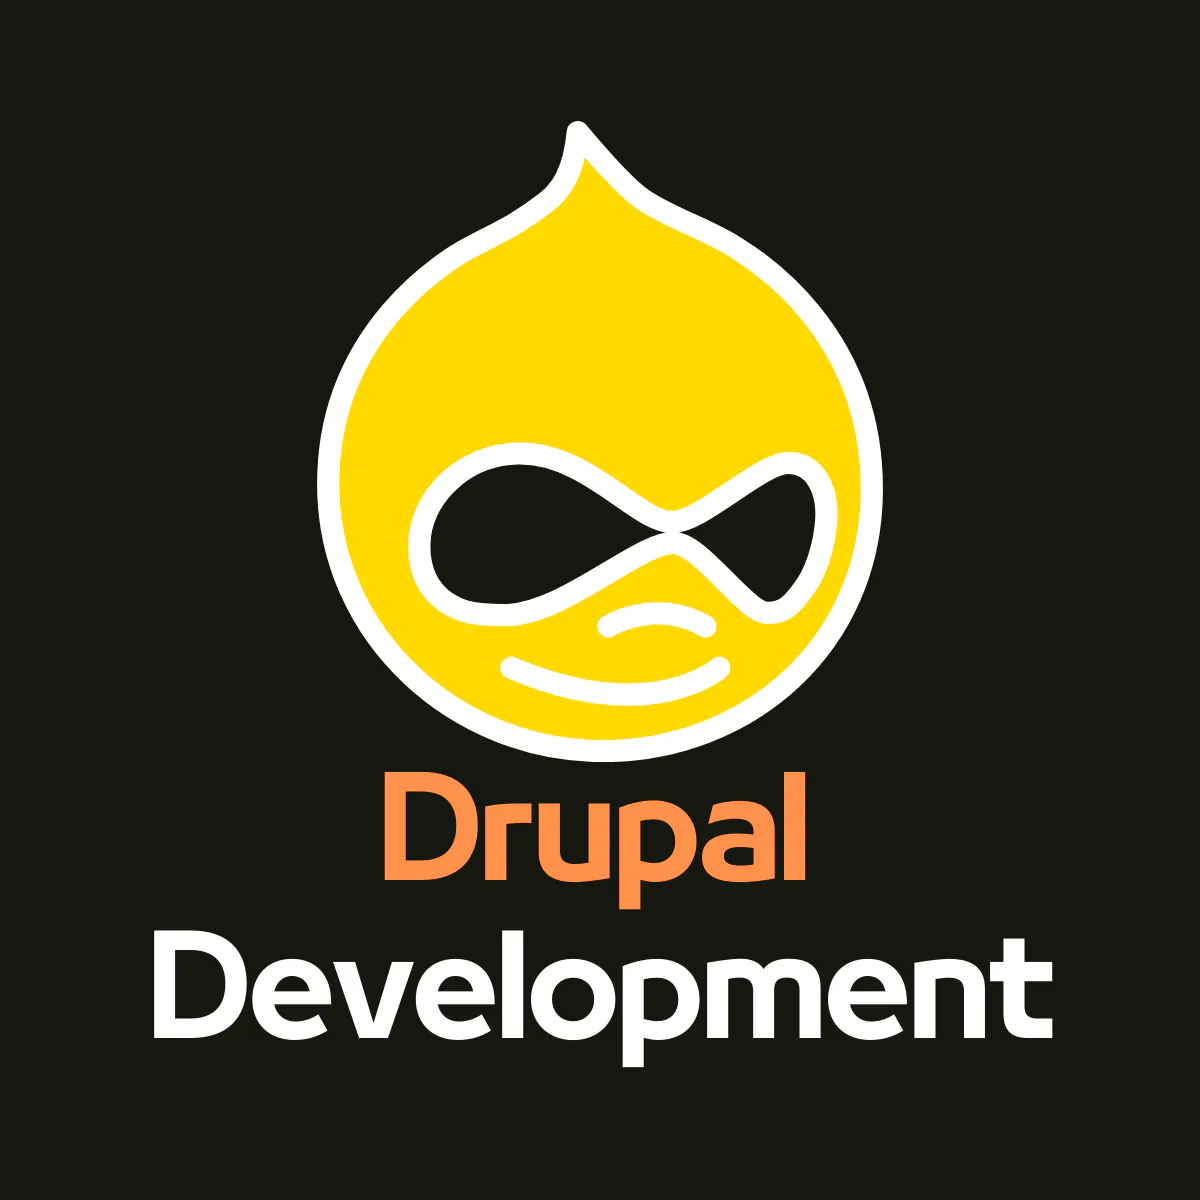 Drupal Website Development Services: Build a Powerful Website